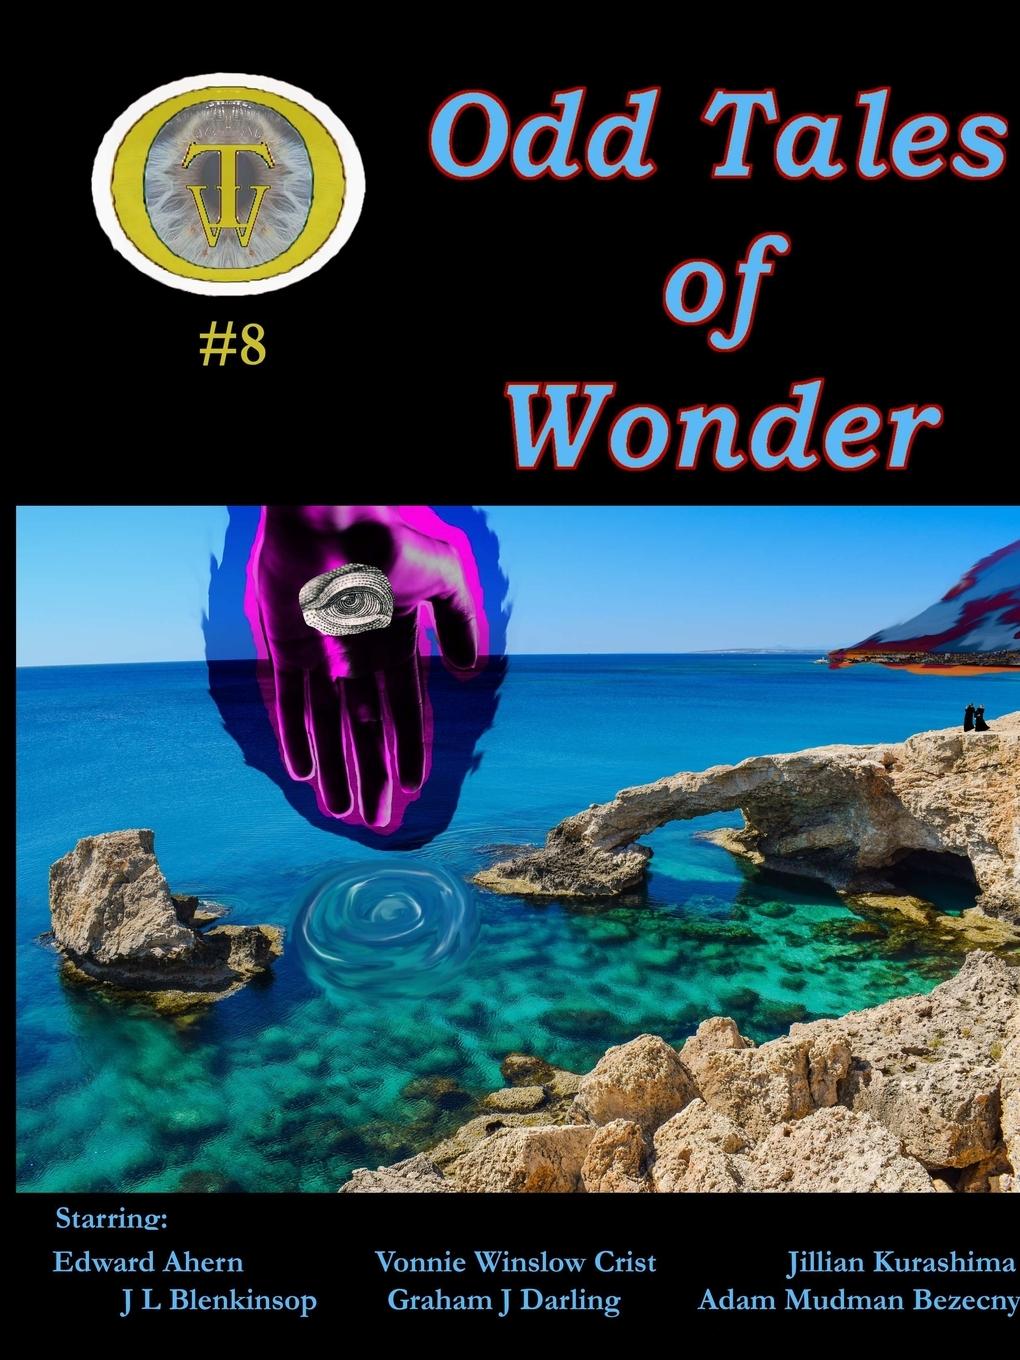 Odd Tales of Wonder #8 - Bezecny, Adam Mudman Crist, Vonnie Winslow Blenkinsop, J L